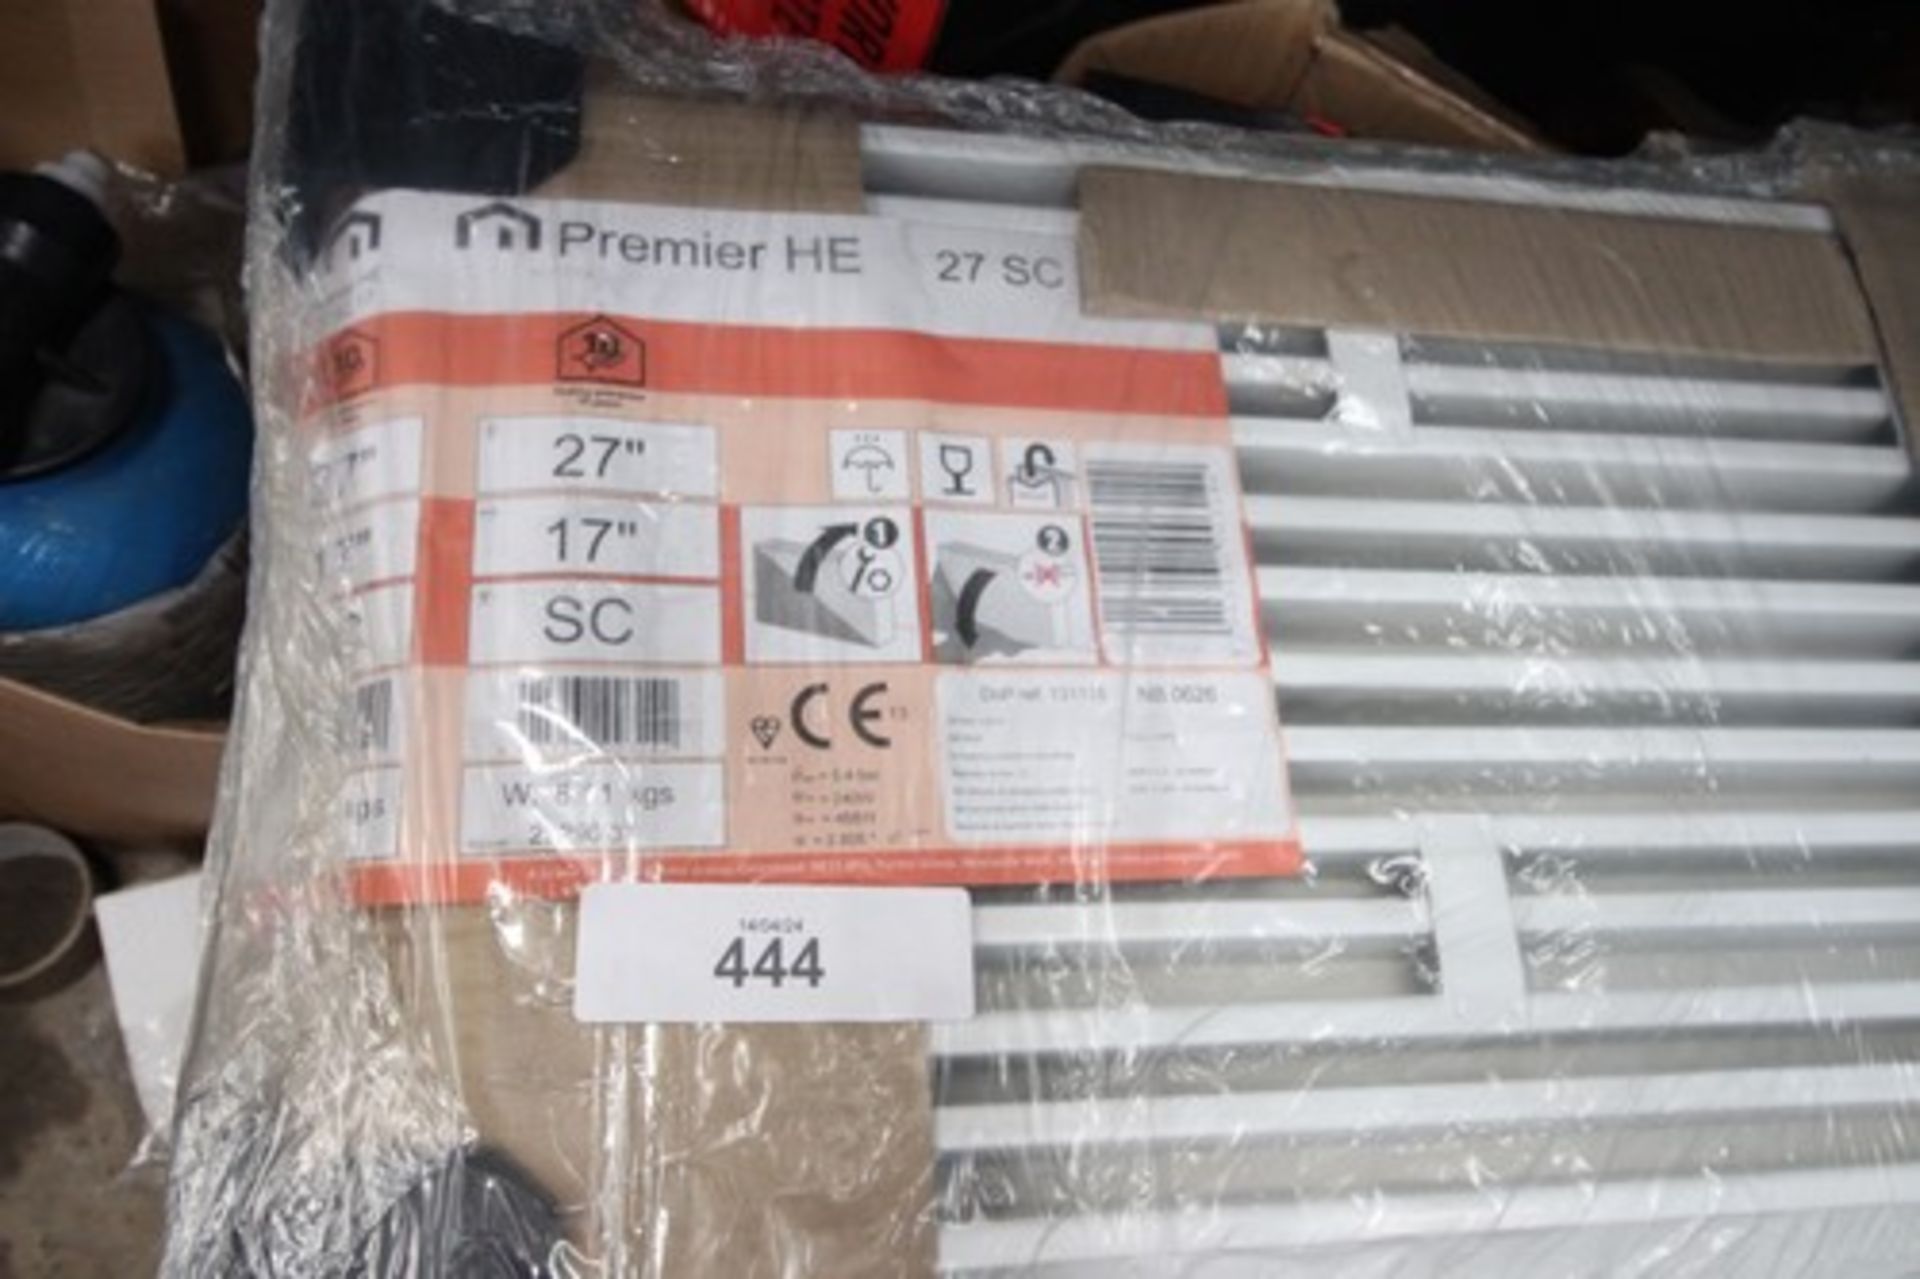 2 x Myson Premier HE 27" x 17" single radiators - Sealed new in pack (GS5)